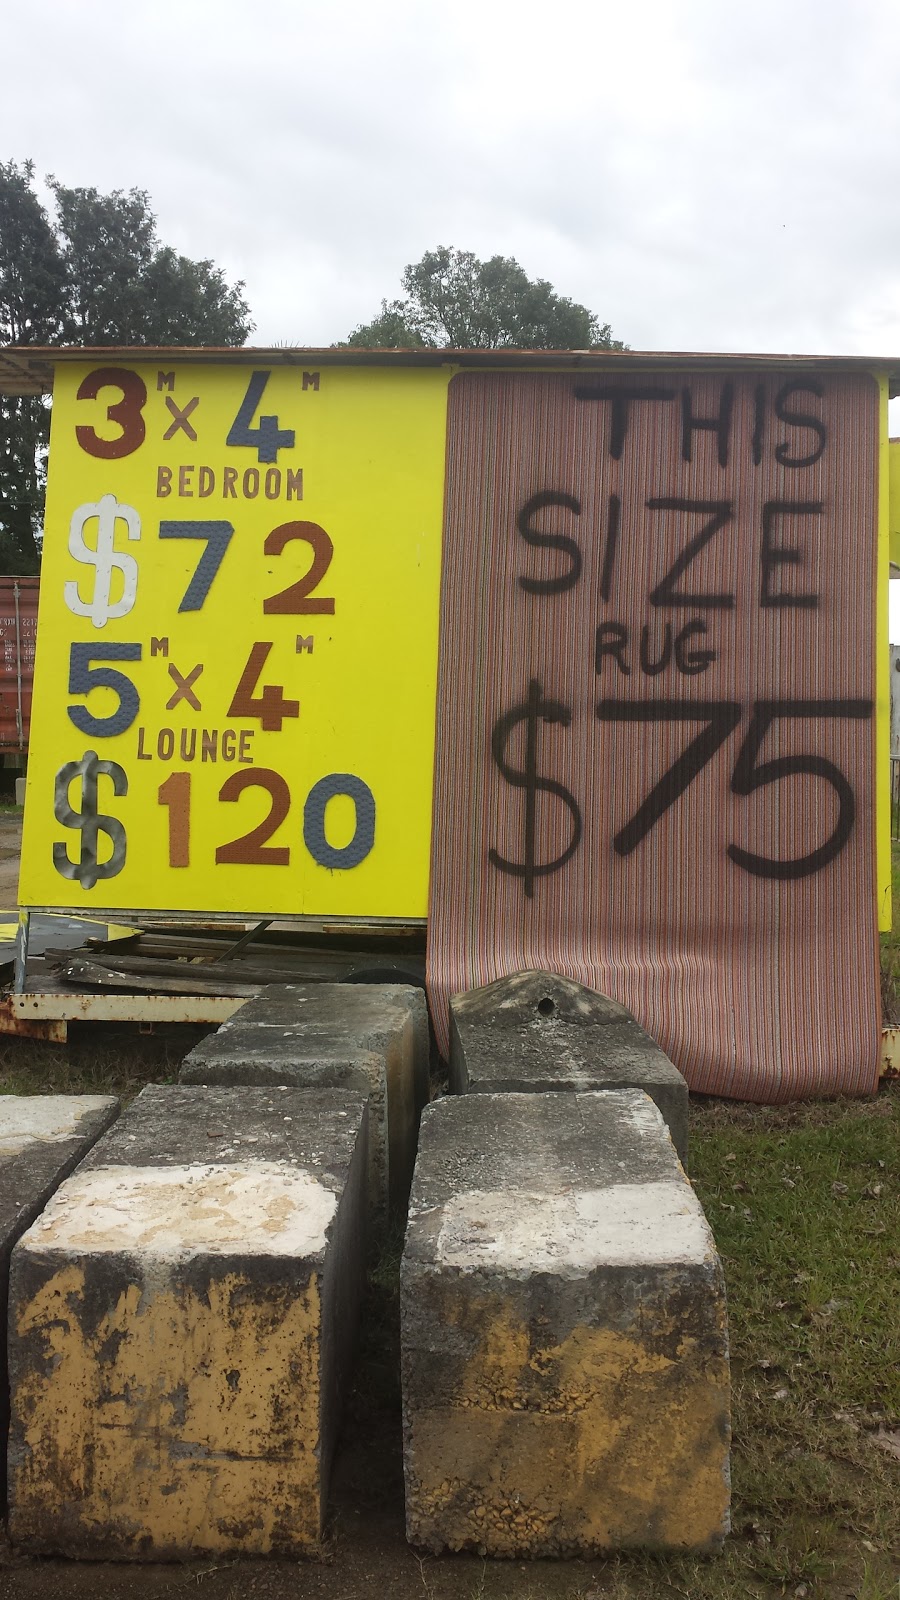 Dead Cheap Carpets / A. C. E Carpets | home goods store | 238 Hastings River Dr, Port Macquarie NSW 2444, Australia | 0265841515 OR +61 2 6584 1515